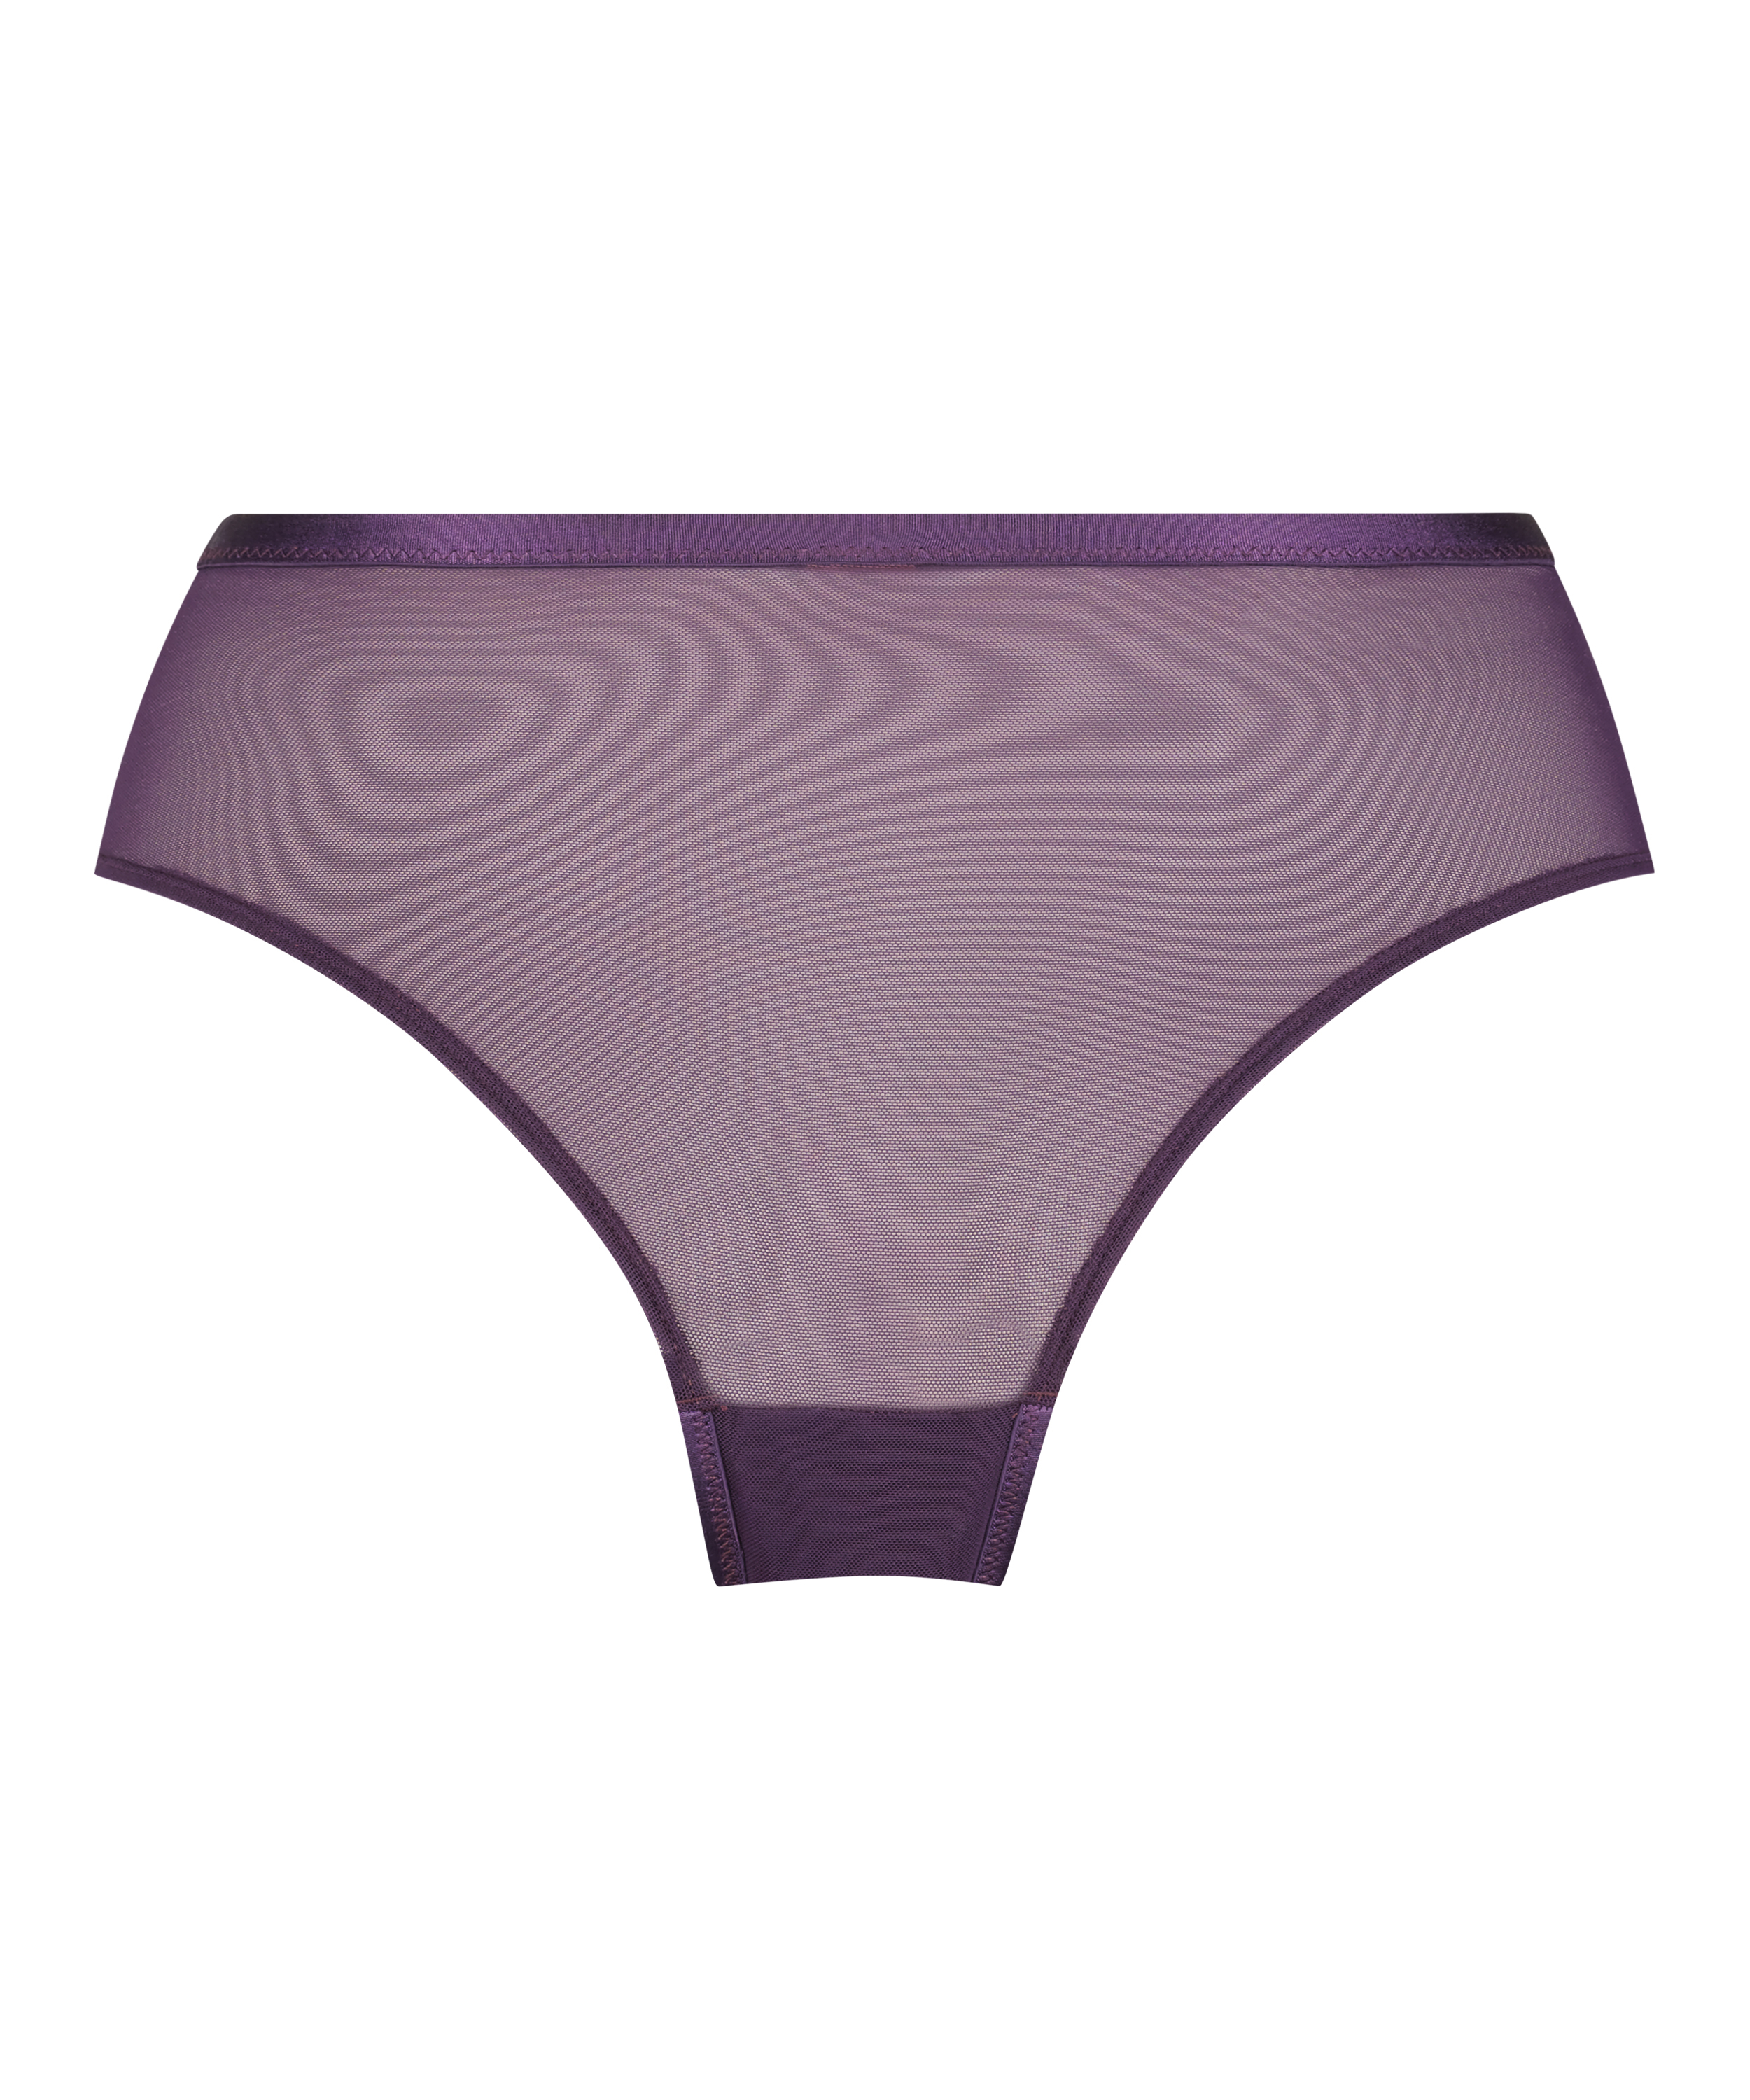 Sienna Brasilian, Purple, main